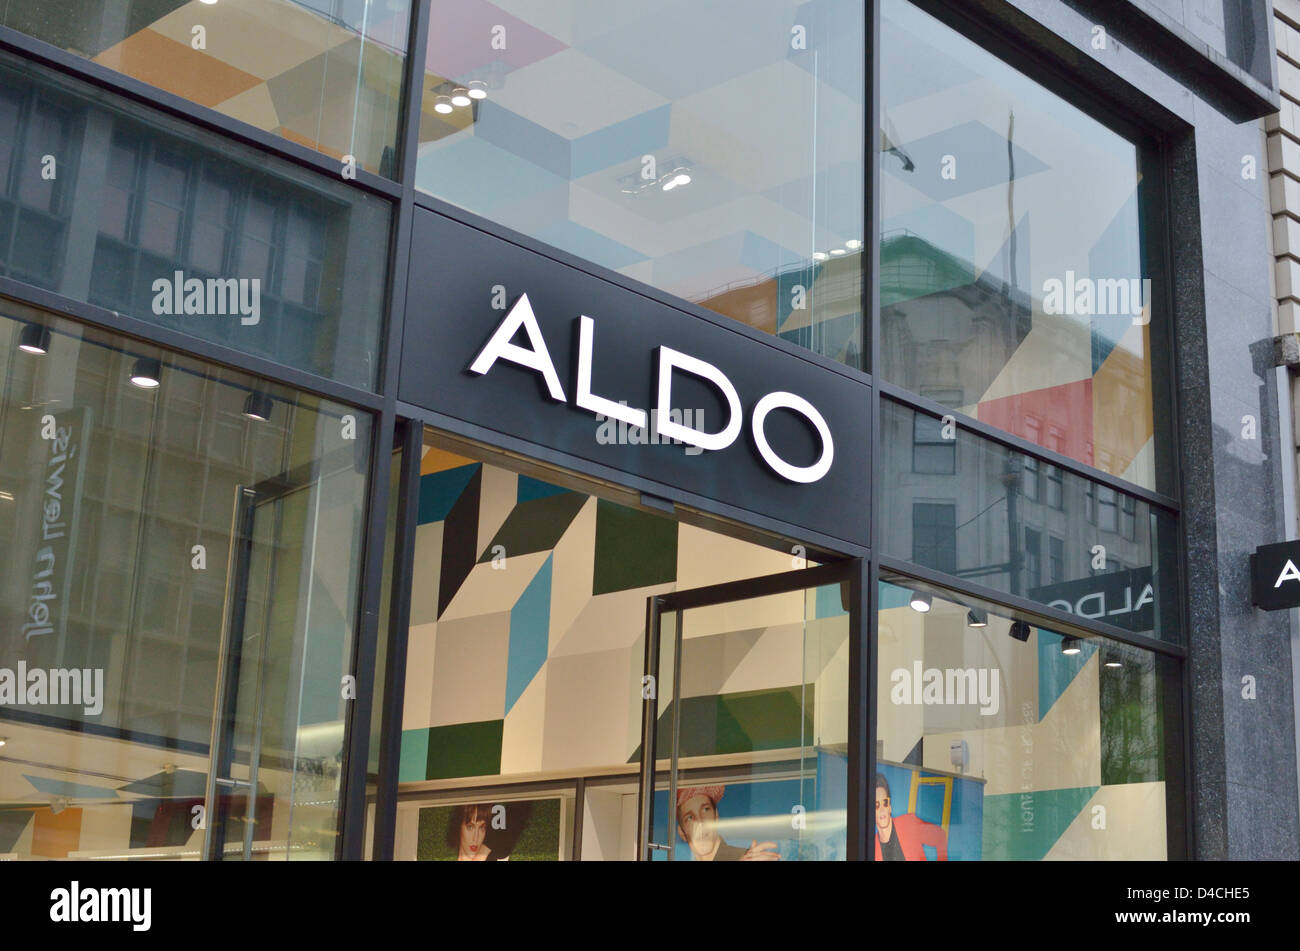 Aldo shoe shop in Oxford Street, London, UK. Stock Photo